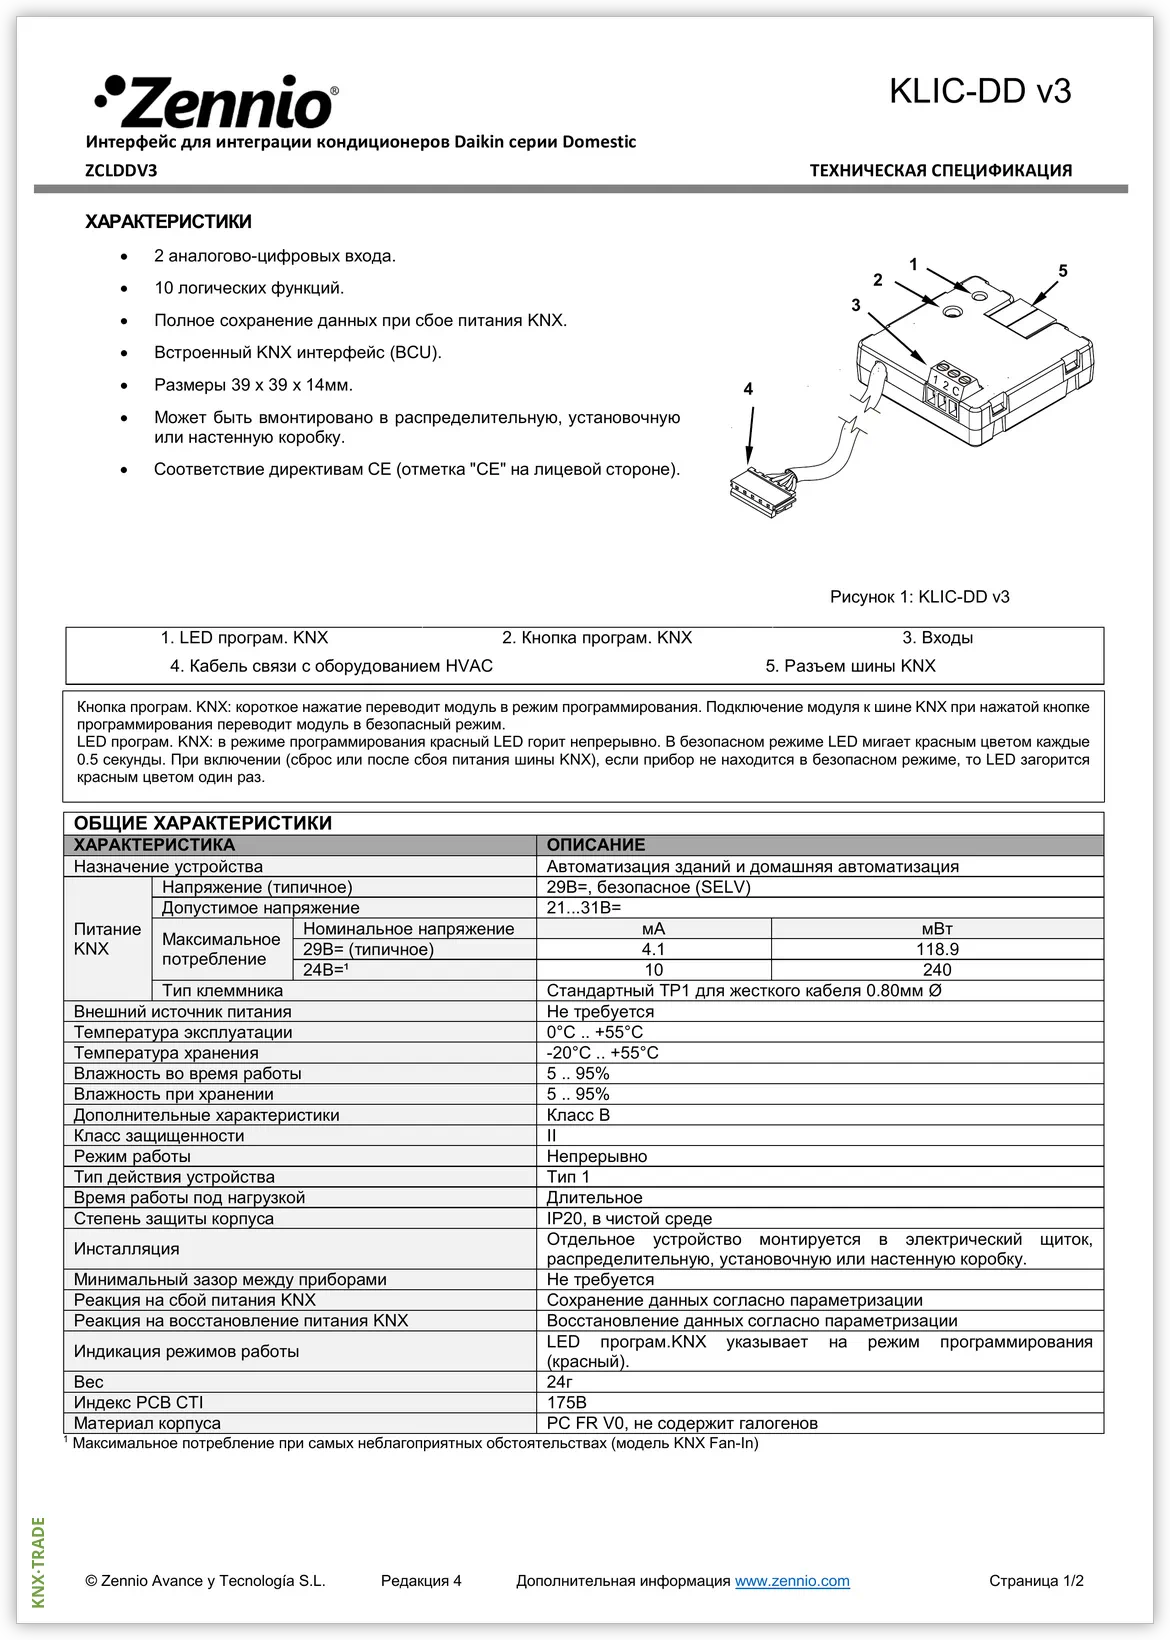 Datasheet (1) Zennio [ZCLDDV3] KLIC-DD v3 / Шлюз KNX для управления кондиционерами Daikin Residential